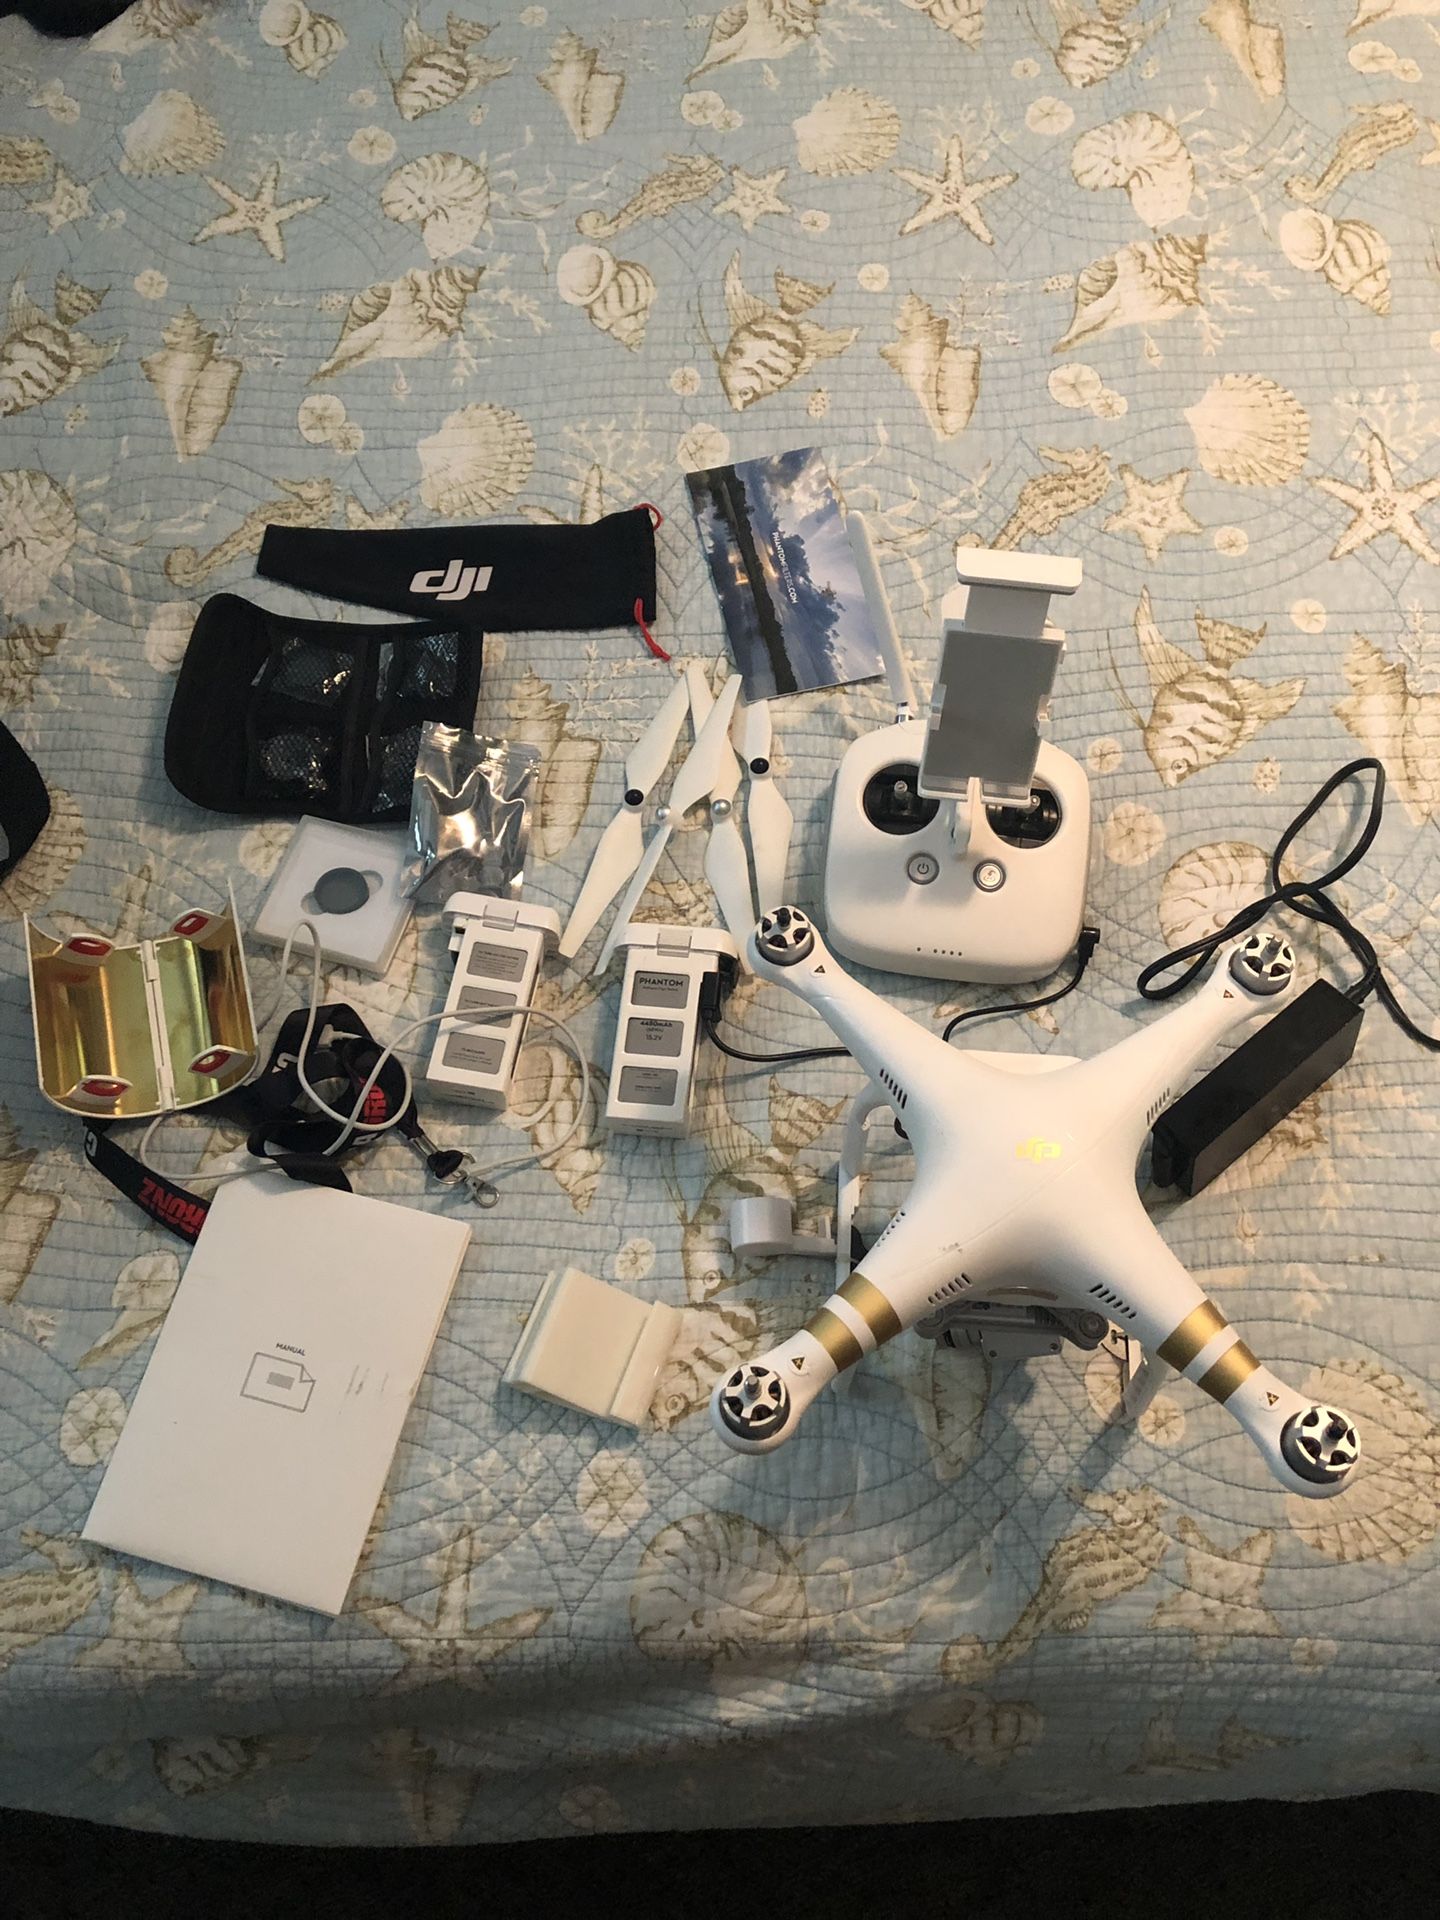 DJI phantom 3 pro drone